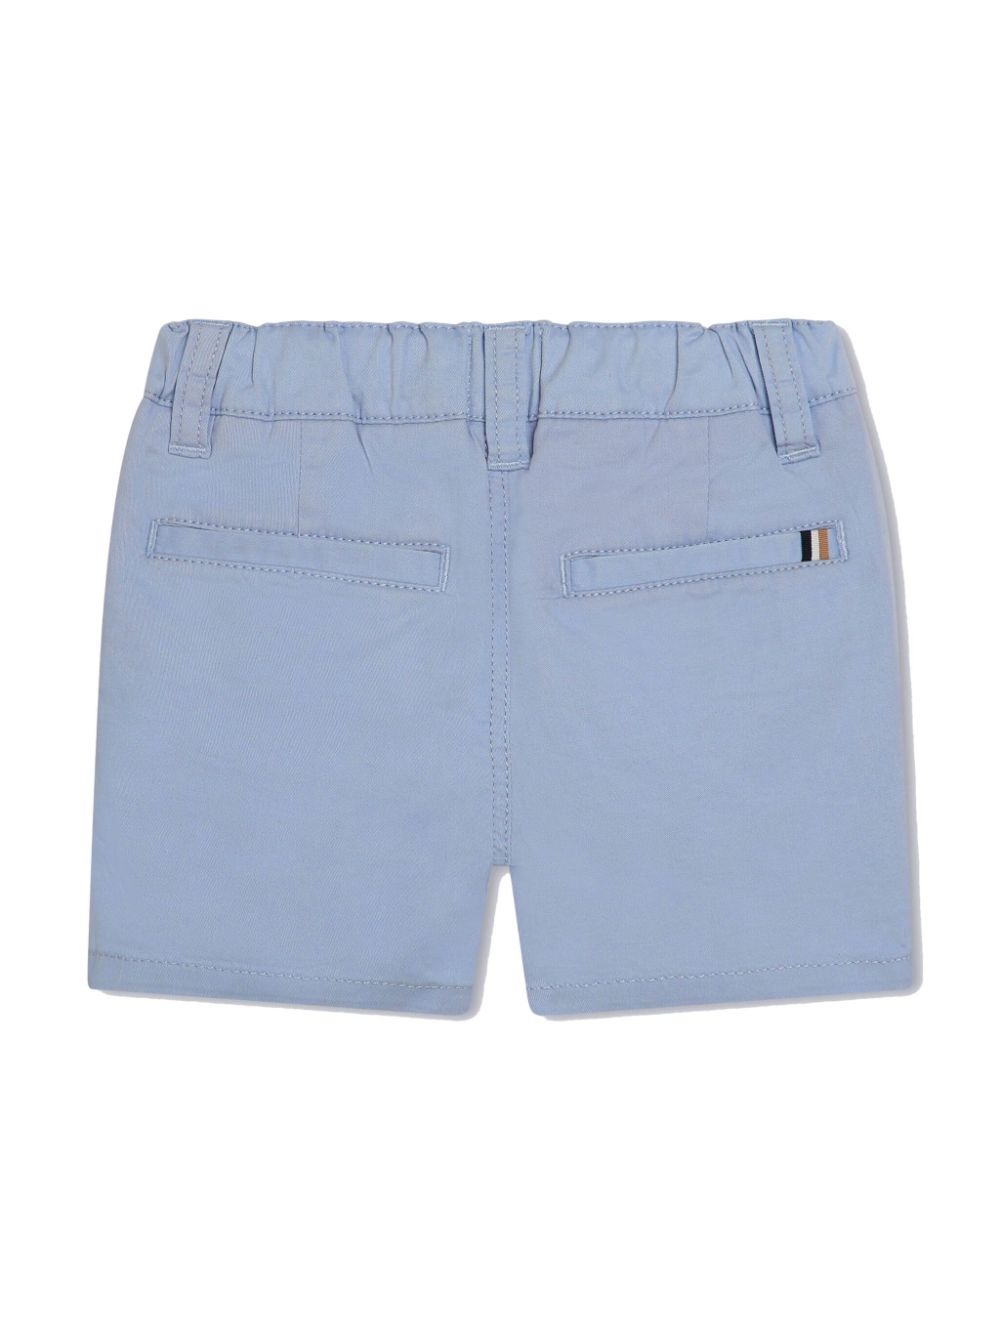 Pastel blue Bermuda shorts for newborns